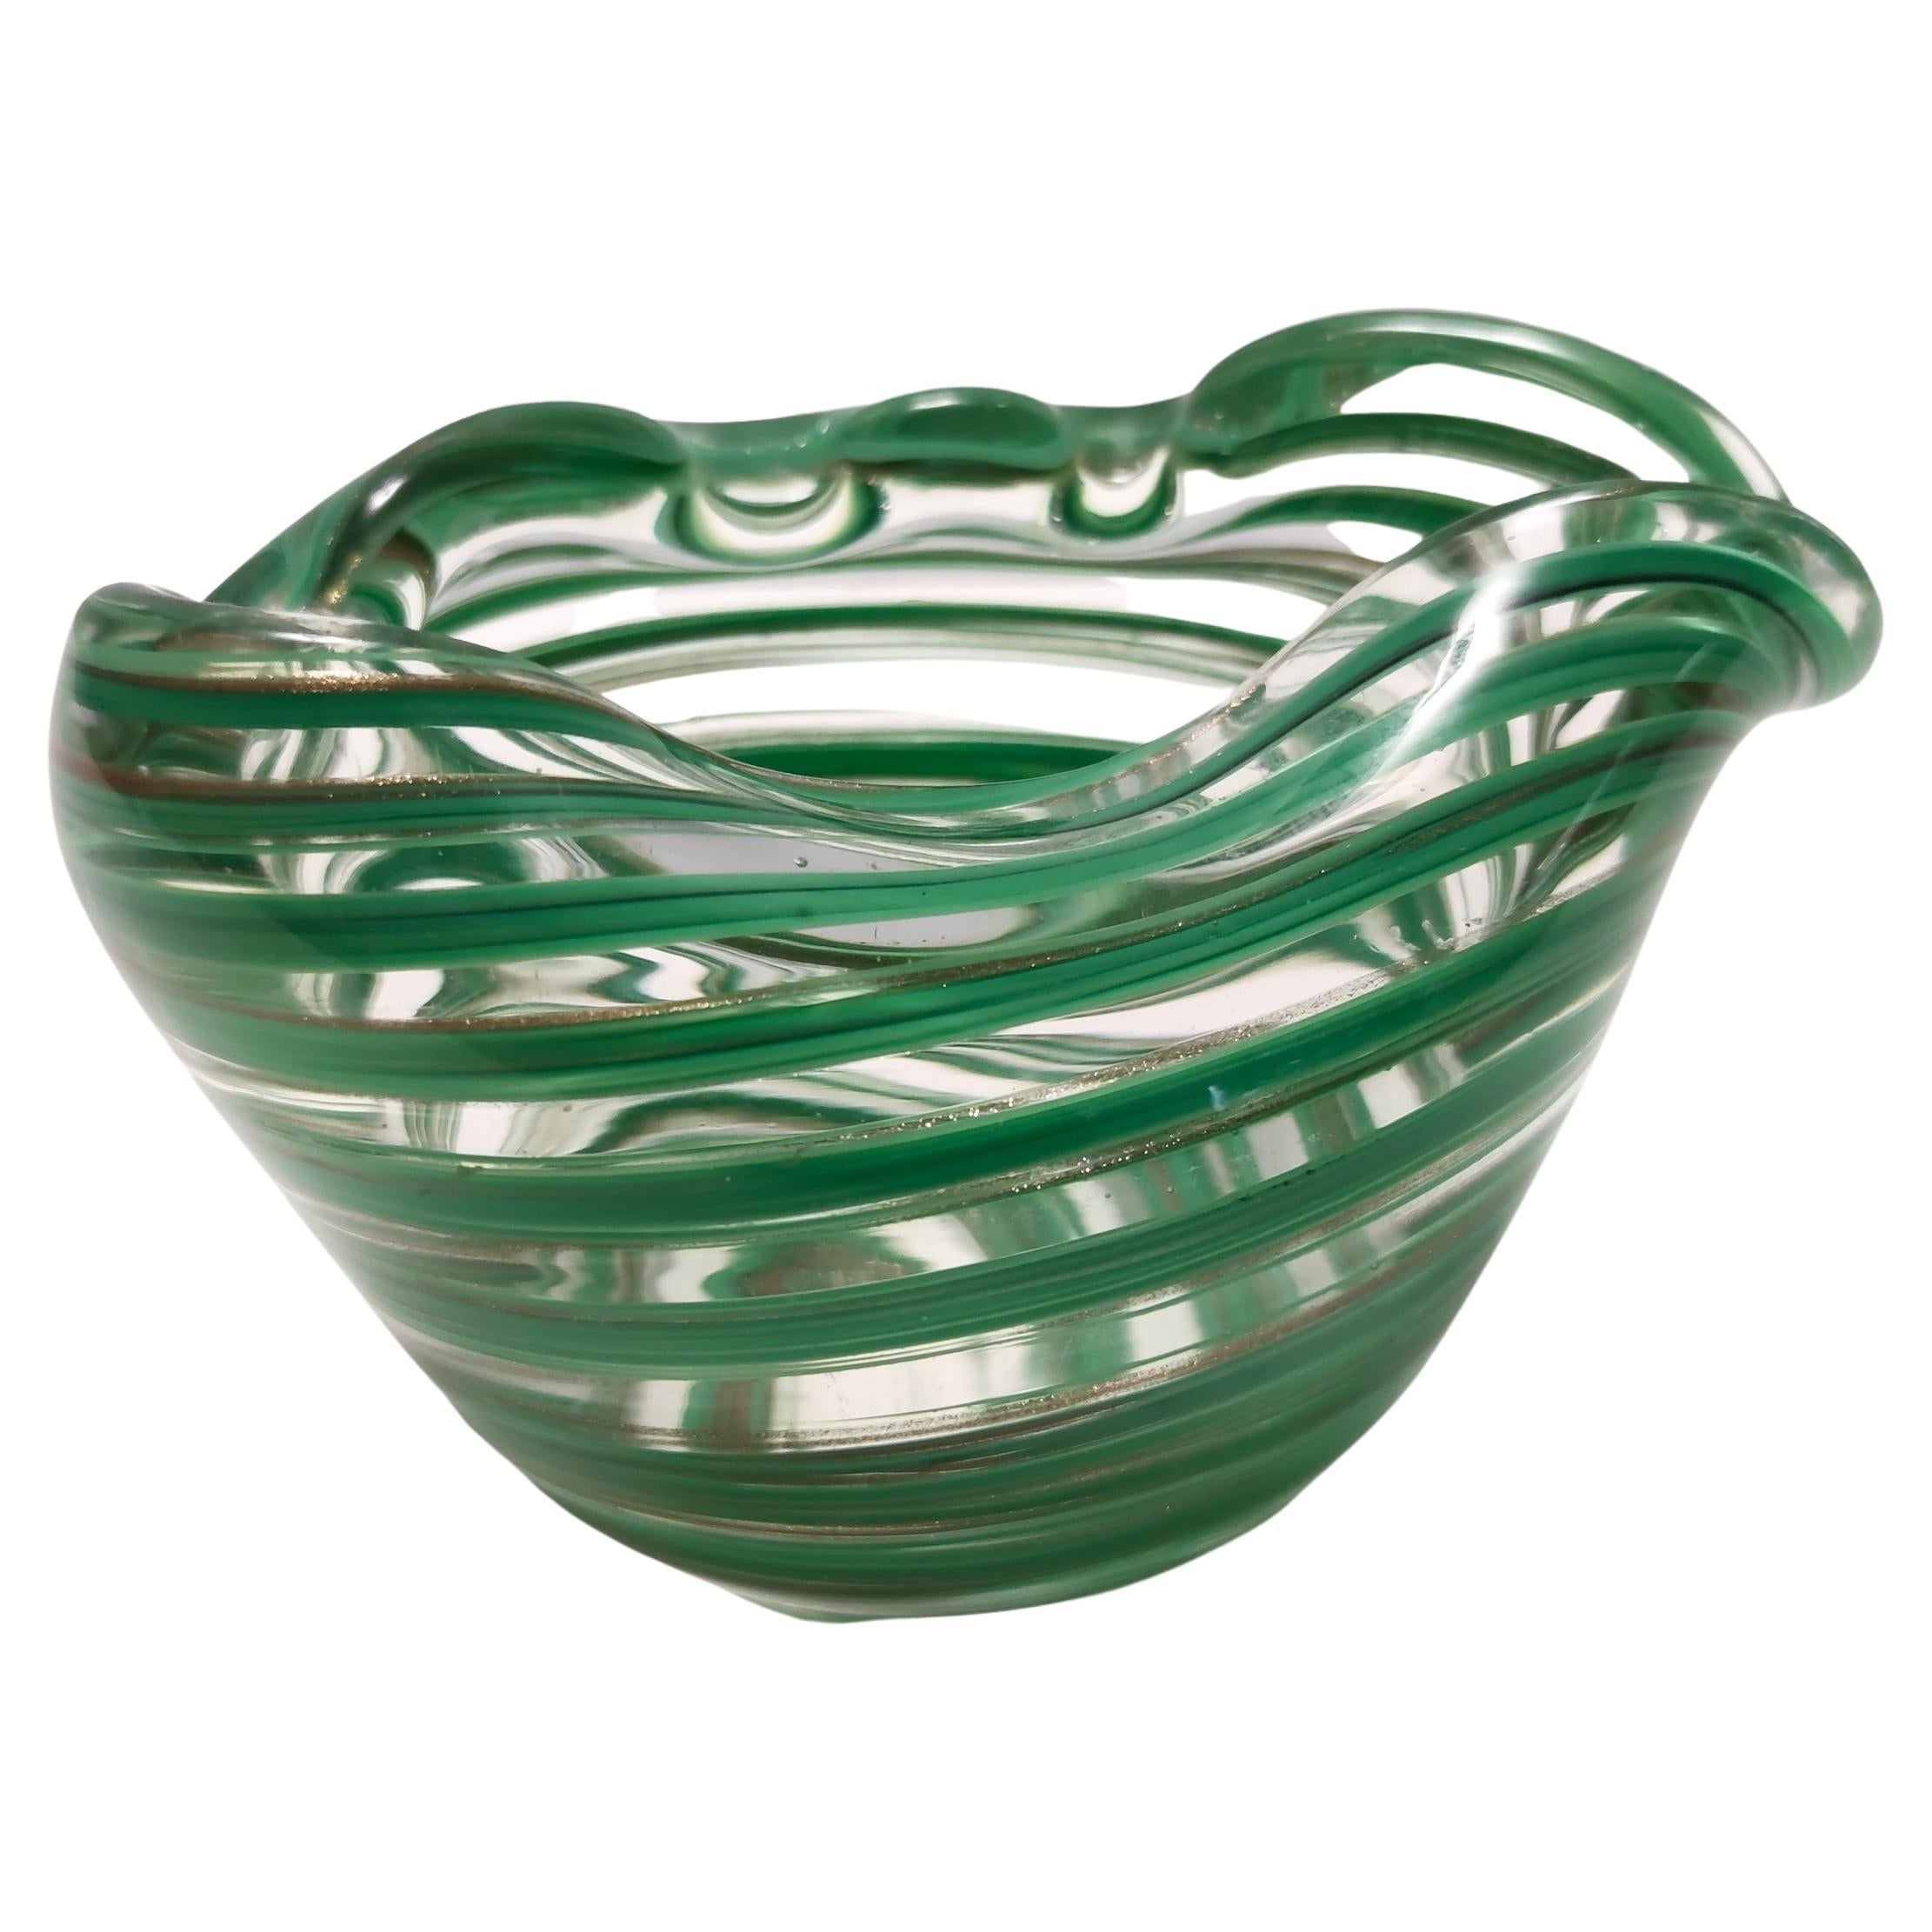 Bol ou cendrier en verre de Murano avec cannes vertes et verre aventurine, Italie